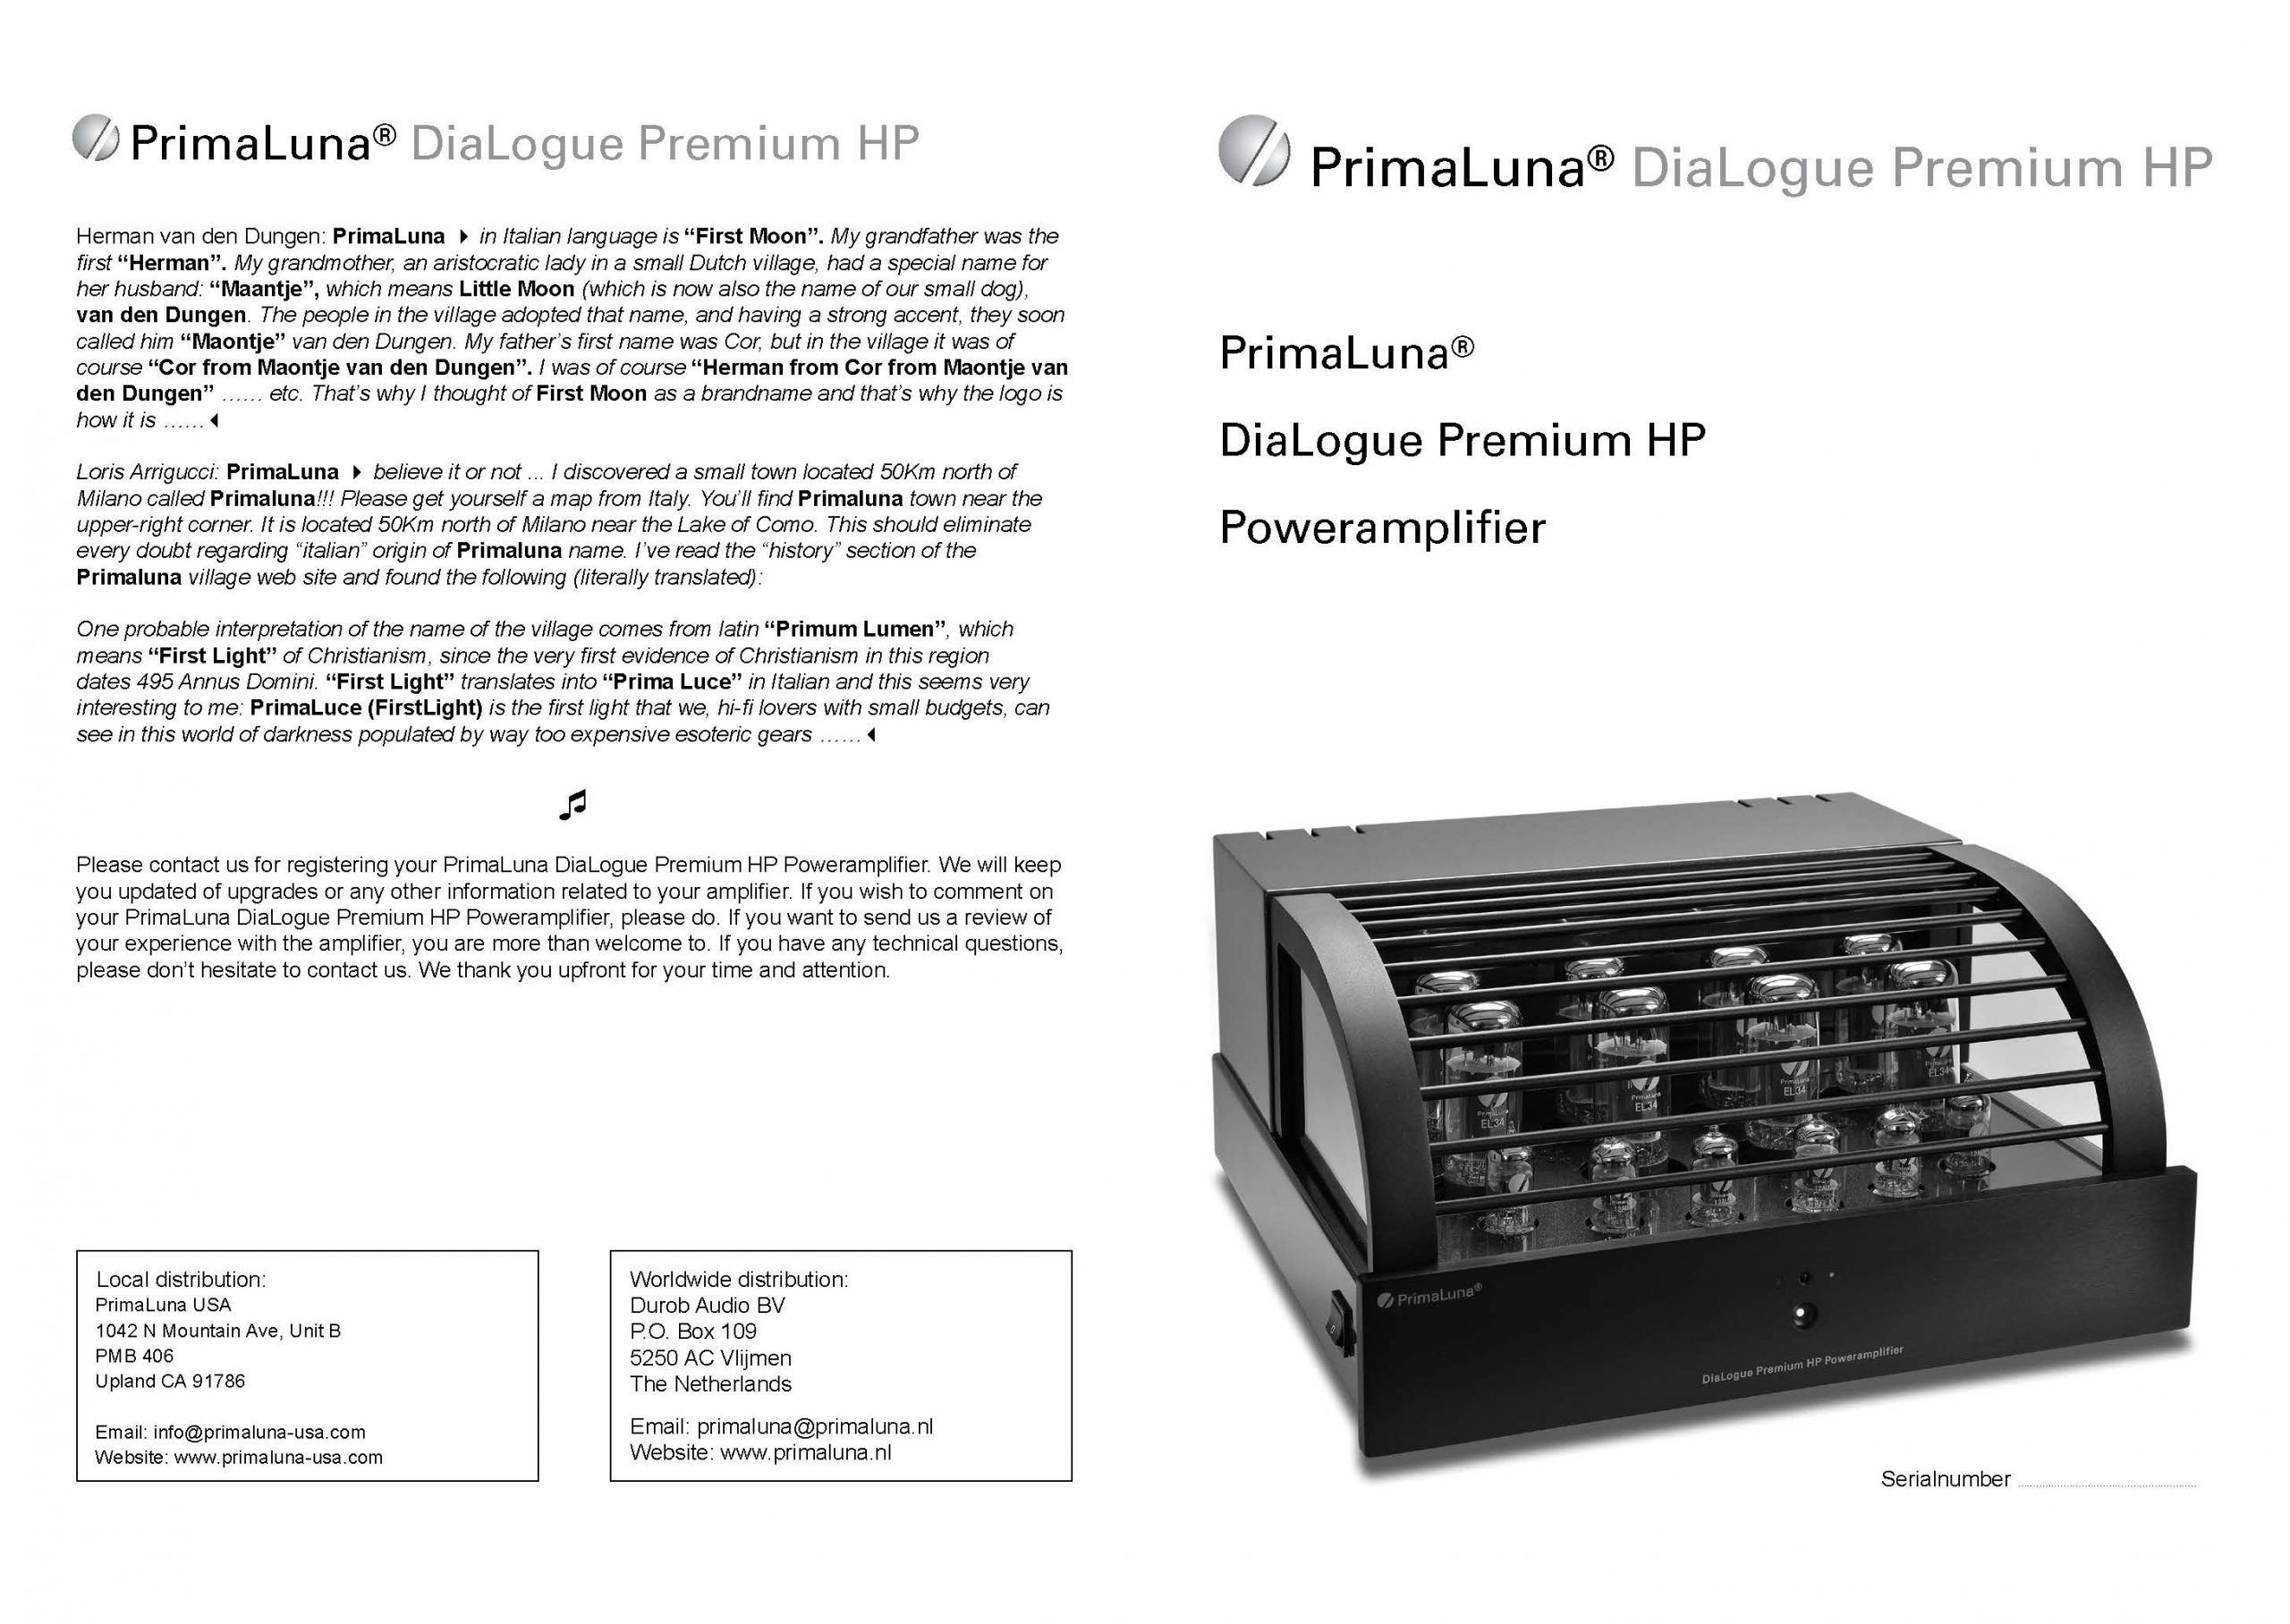 Primaluna DiaLogue Premium HP Power Amplifier User Manual - Norman Audio